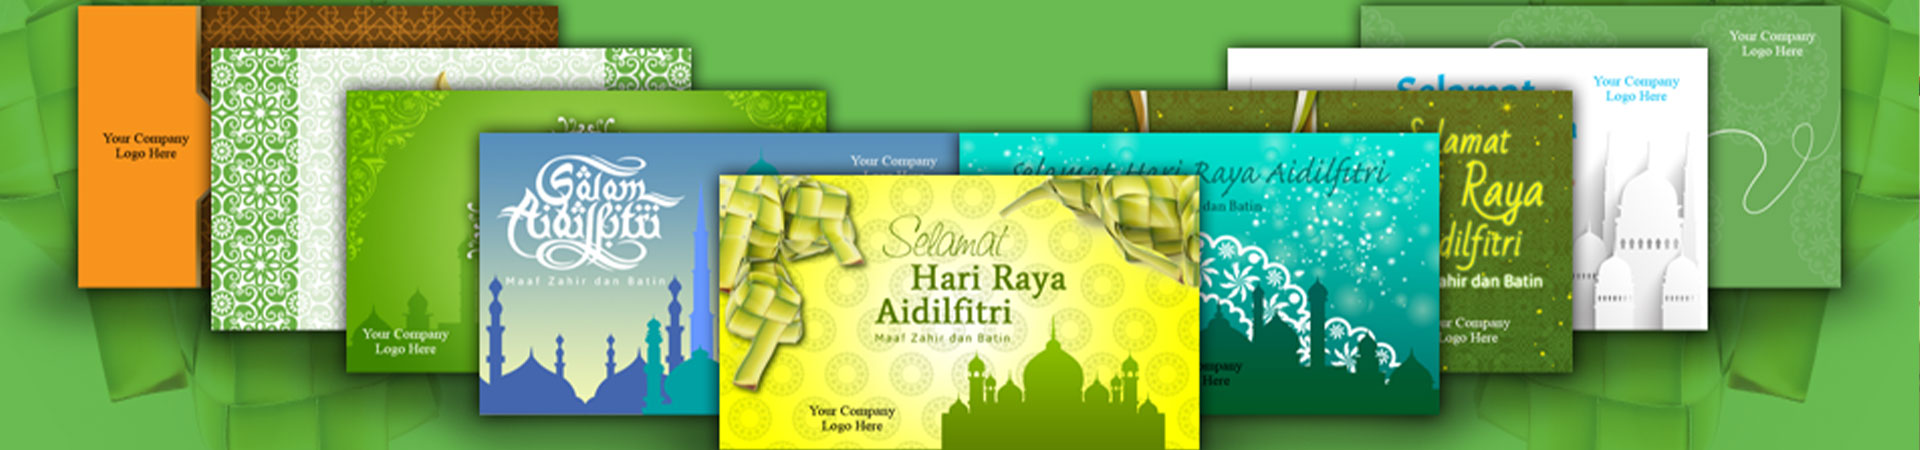 Corporate EGreeting Cards Malaysia